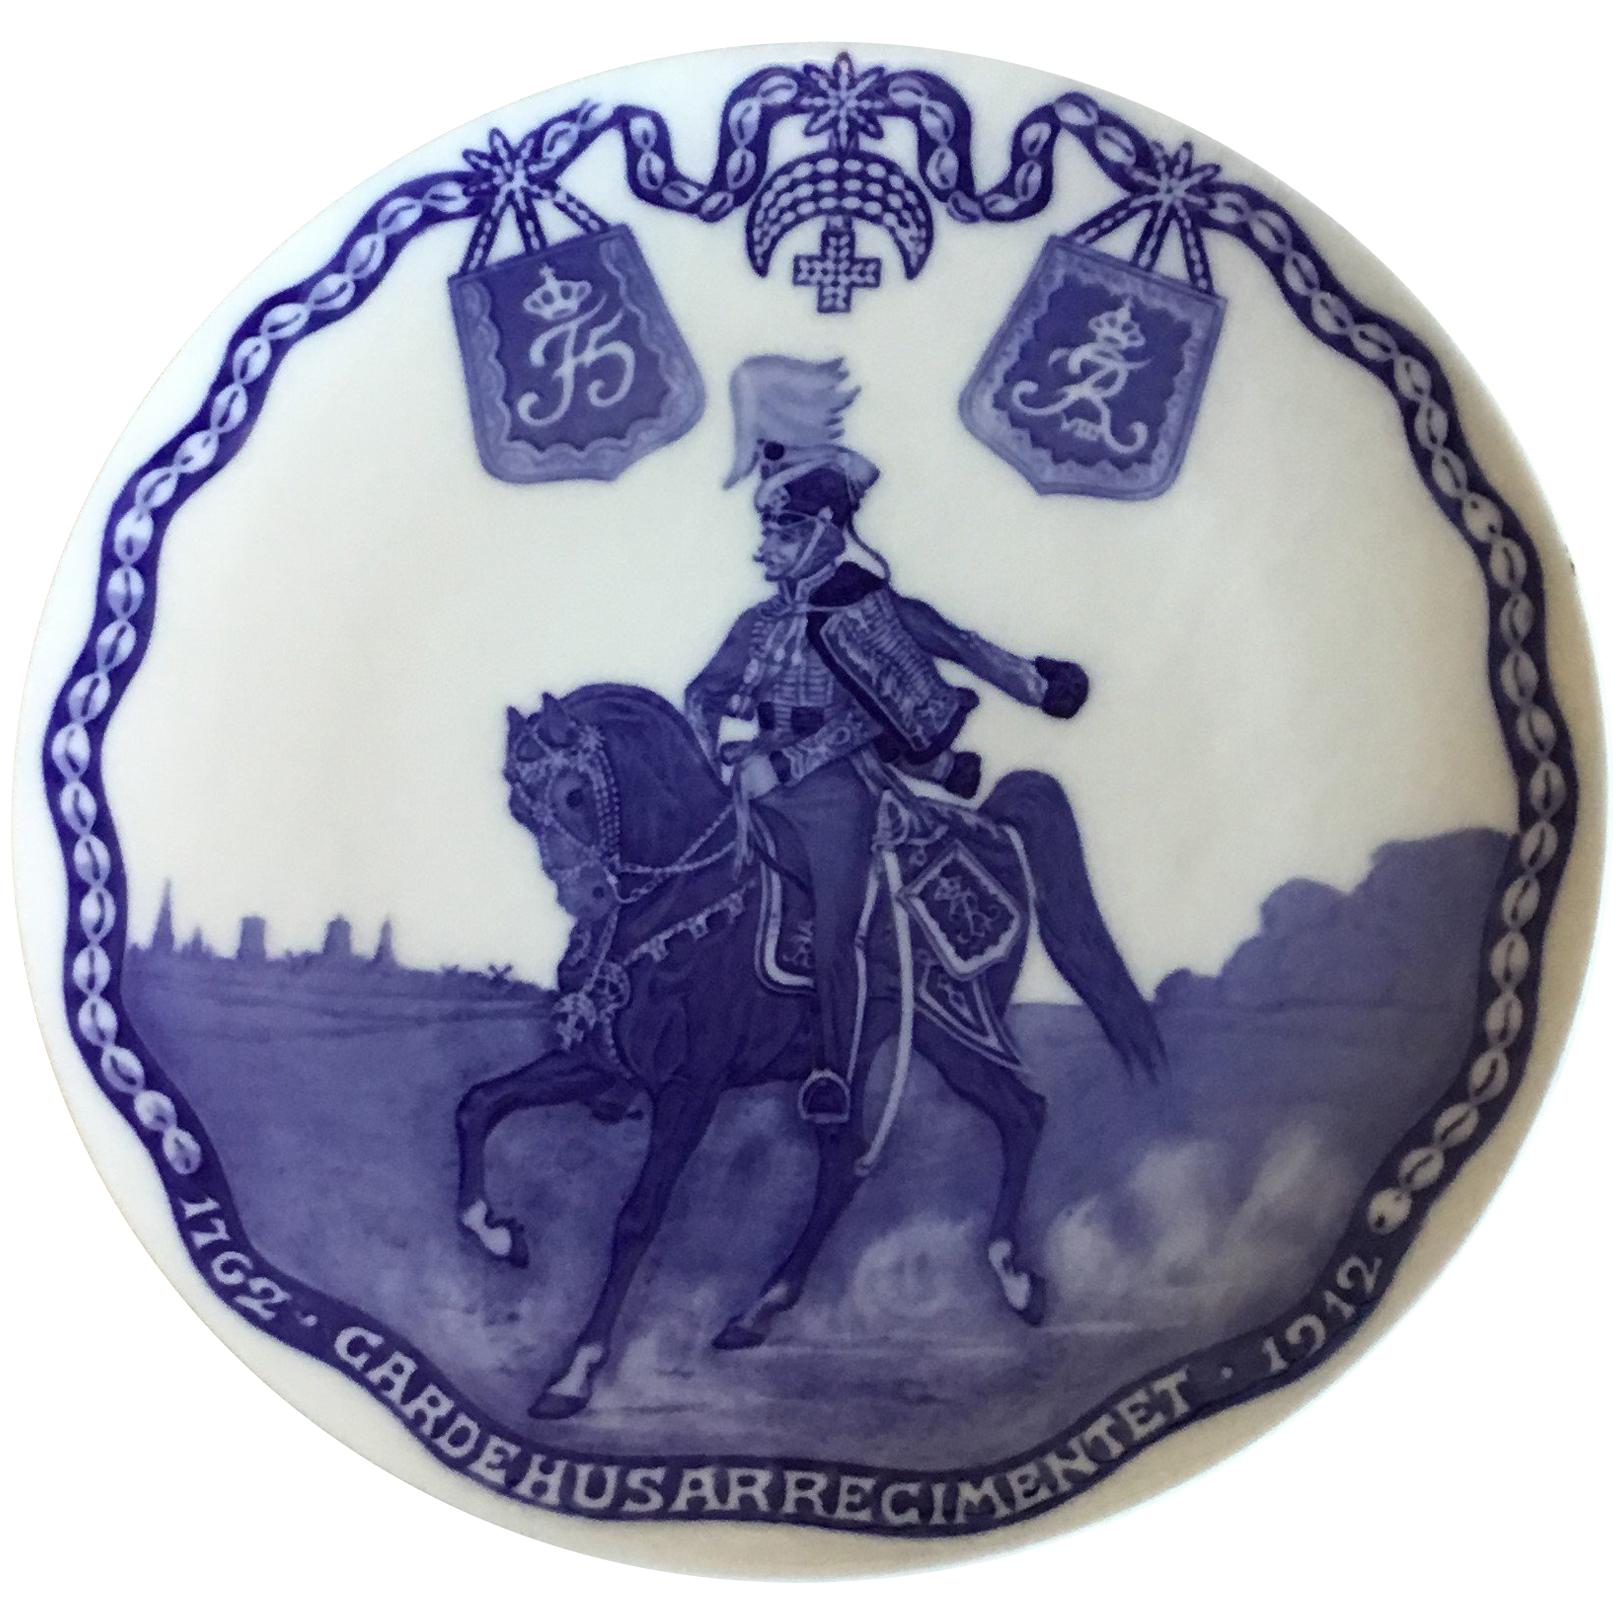 Royal Copenhagen Commemorative Plate from 1912 RC-CM135